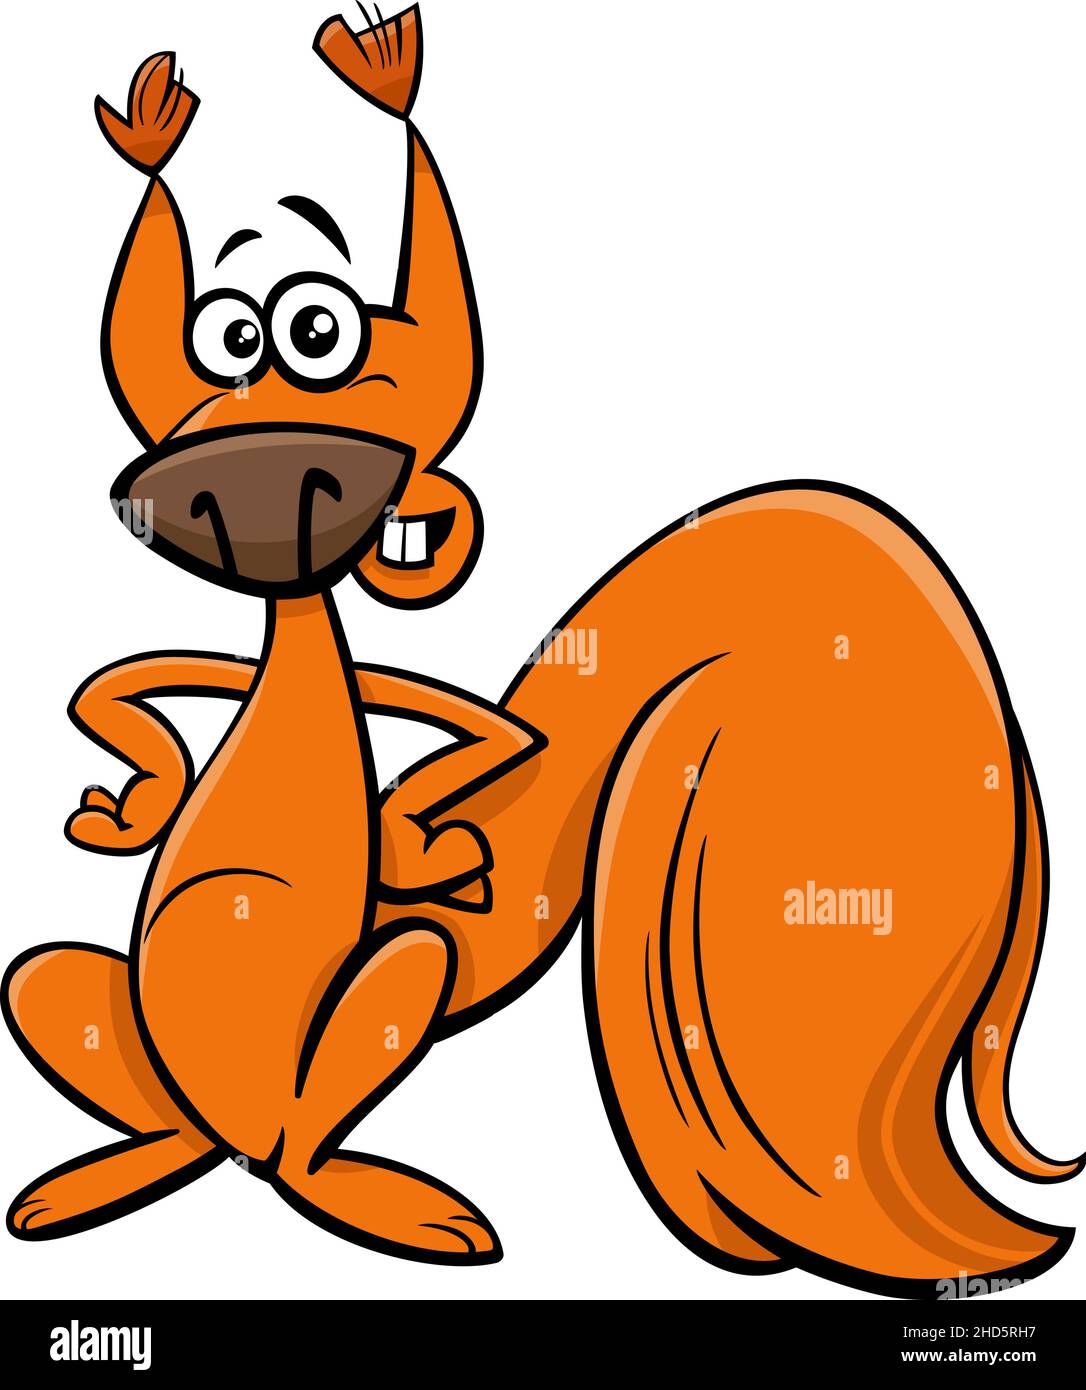 Cartoon illustration of funny squirrel animal character Stock Vector